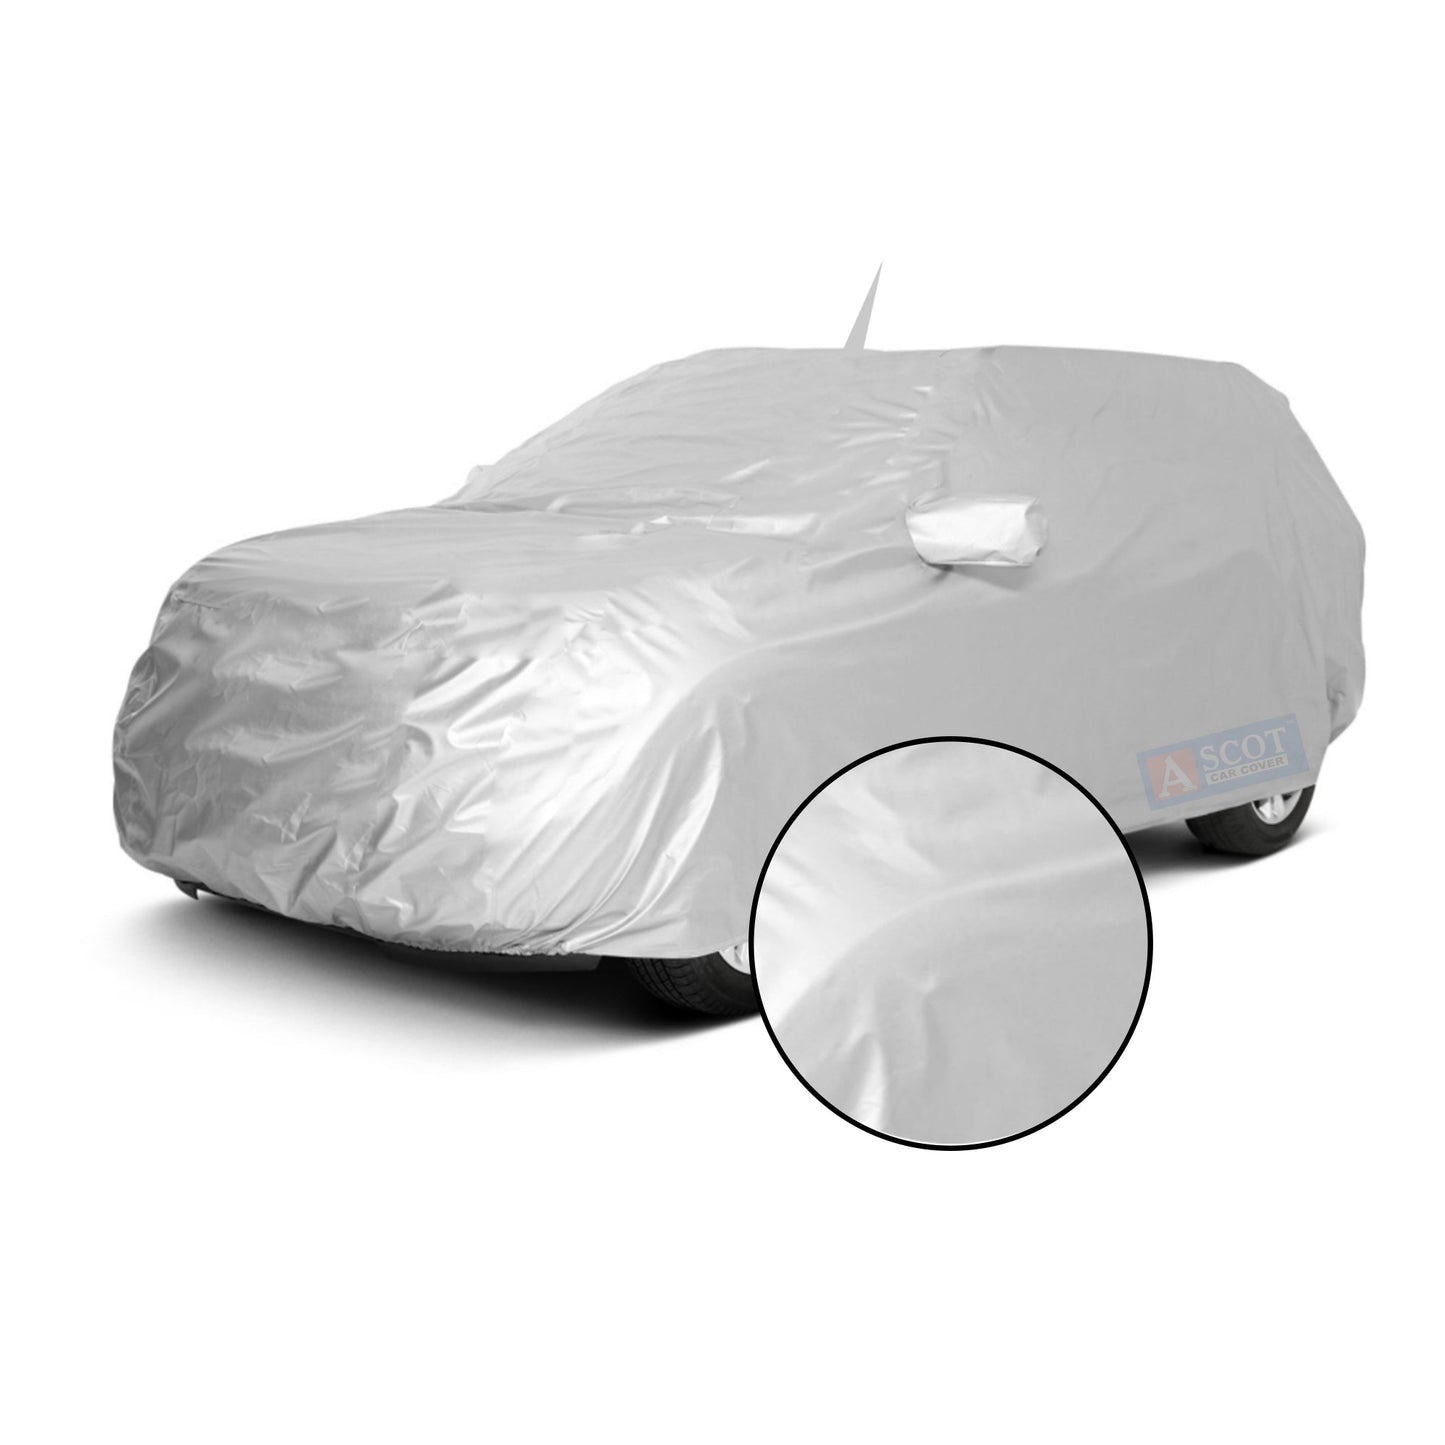 Ascot Maruti Suzuki Dzire 2012-2016 Model Car Body Cover Dust Proof, Trippel Stitched